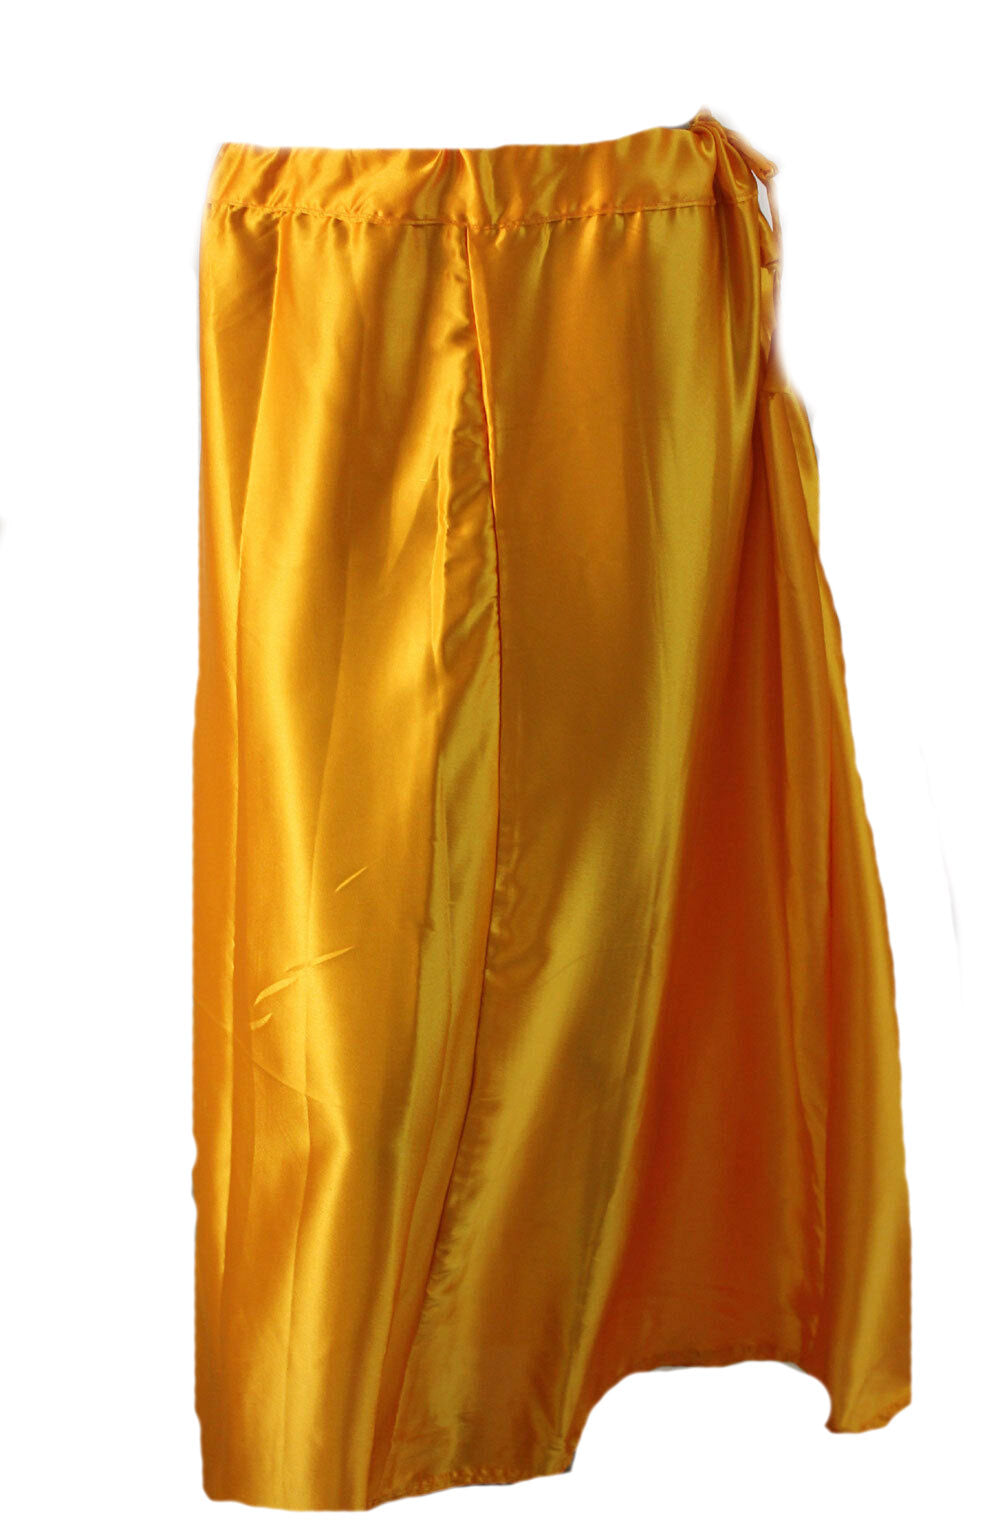 Yellow Luxurious soft satin skirt saree Petticoat Underskirt belly dancing slip